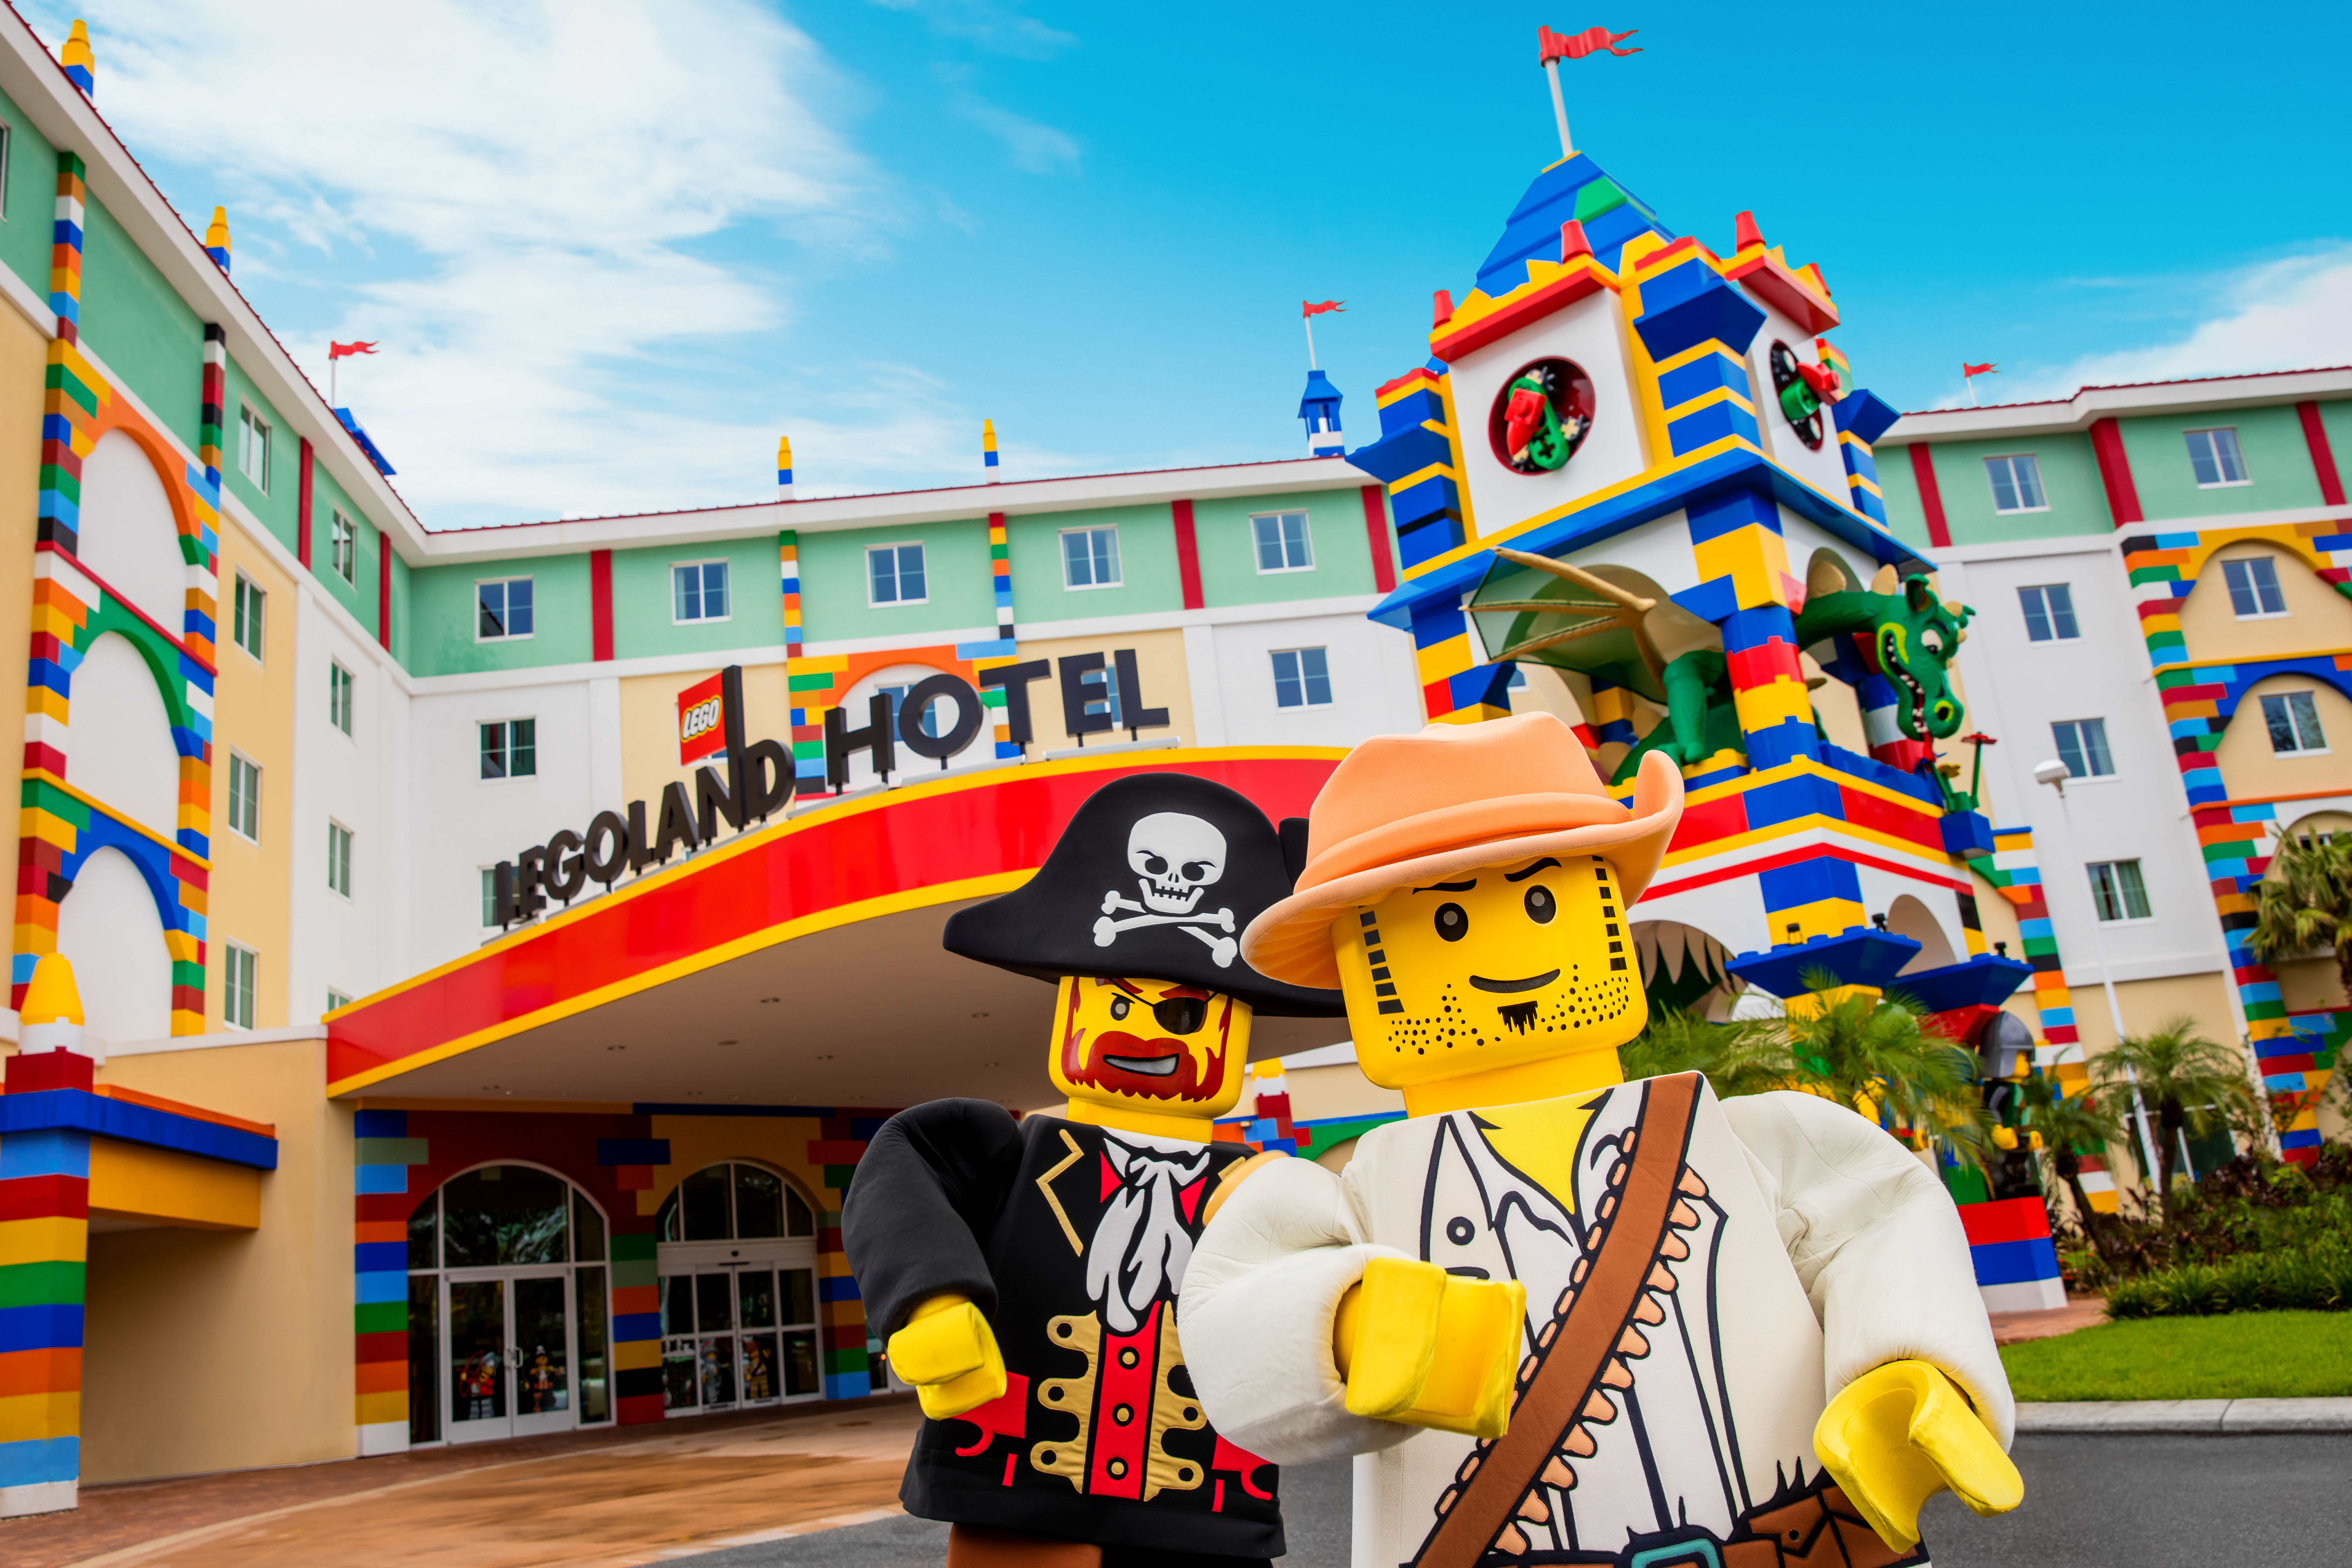 Pirate Island Hotel | Legoland Florida Resorts